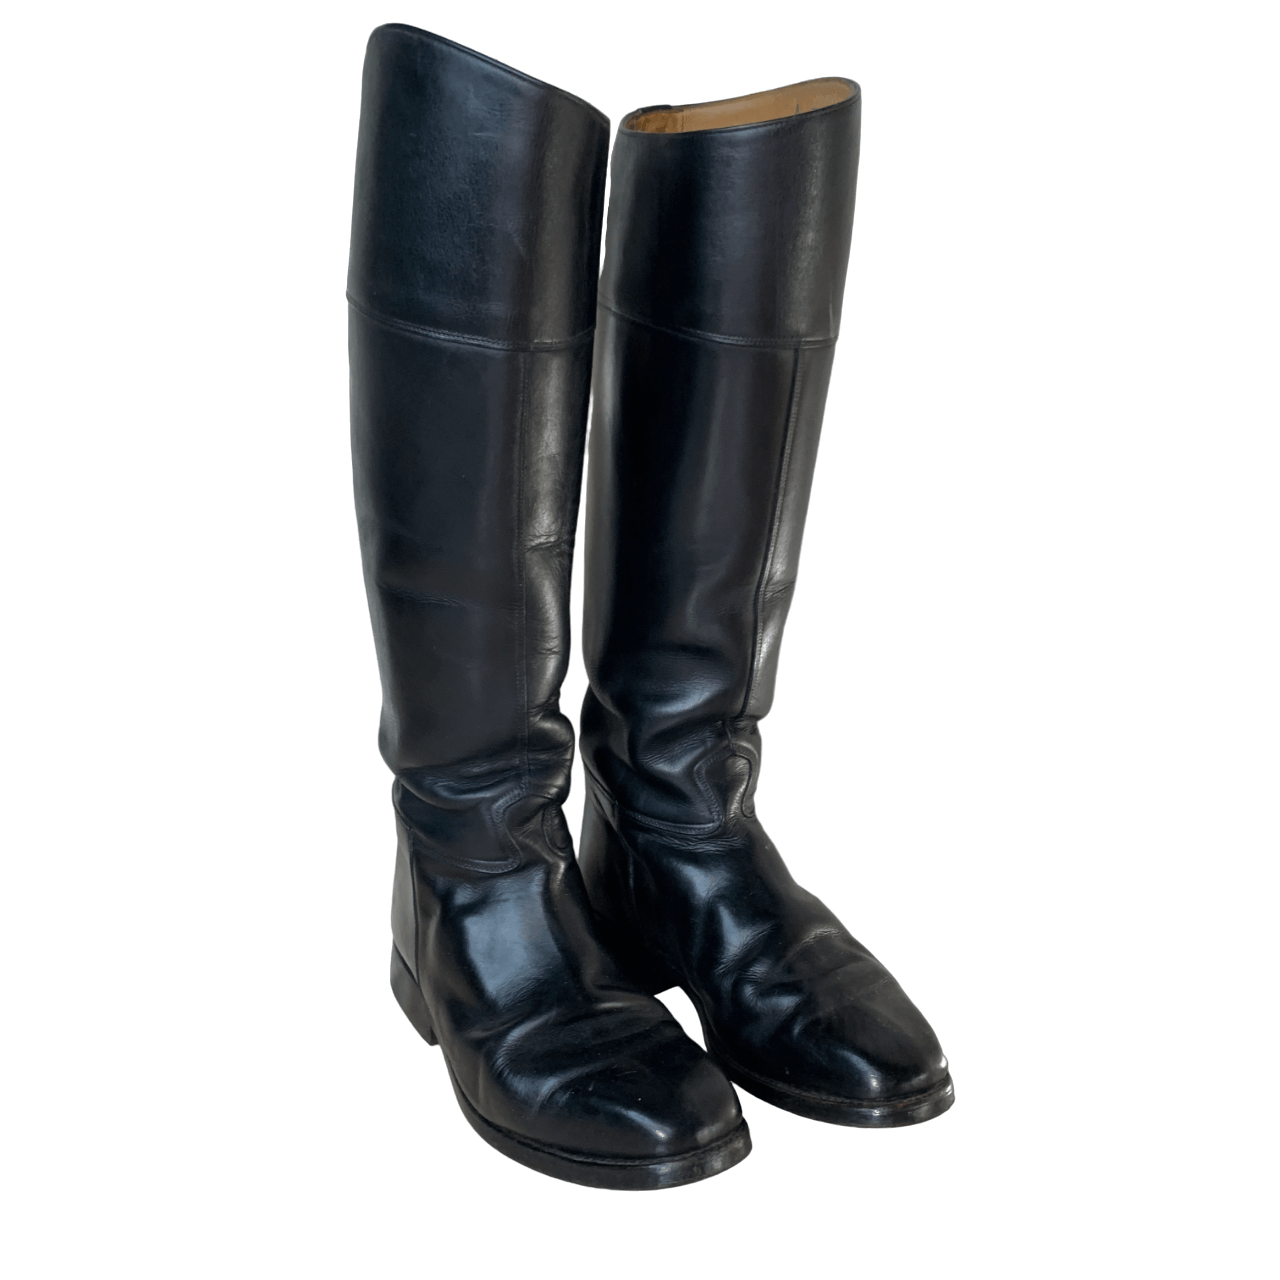 Cavallo Dress Boots in Black - Woman's 6.5